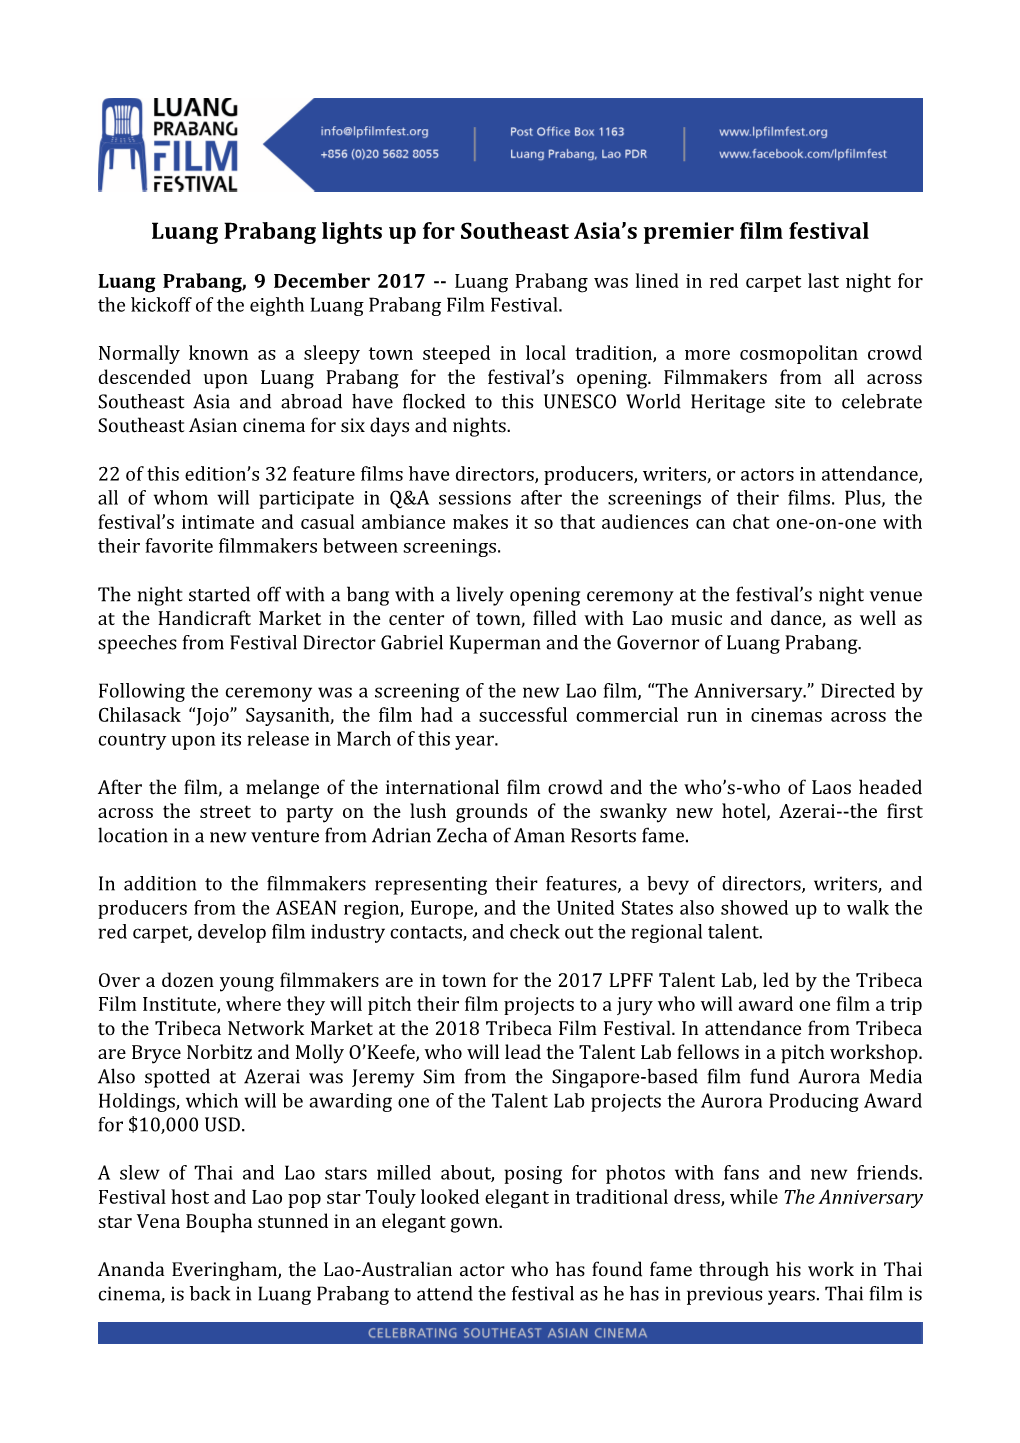 Luang Prabang Lights up for Southeast Asia's Premier Film Festival